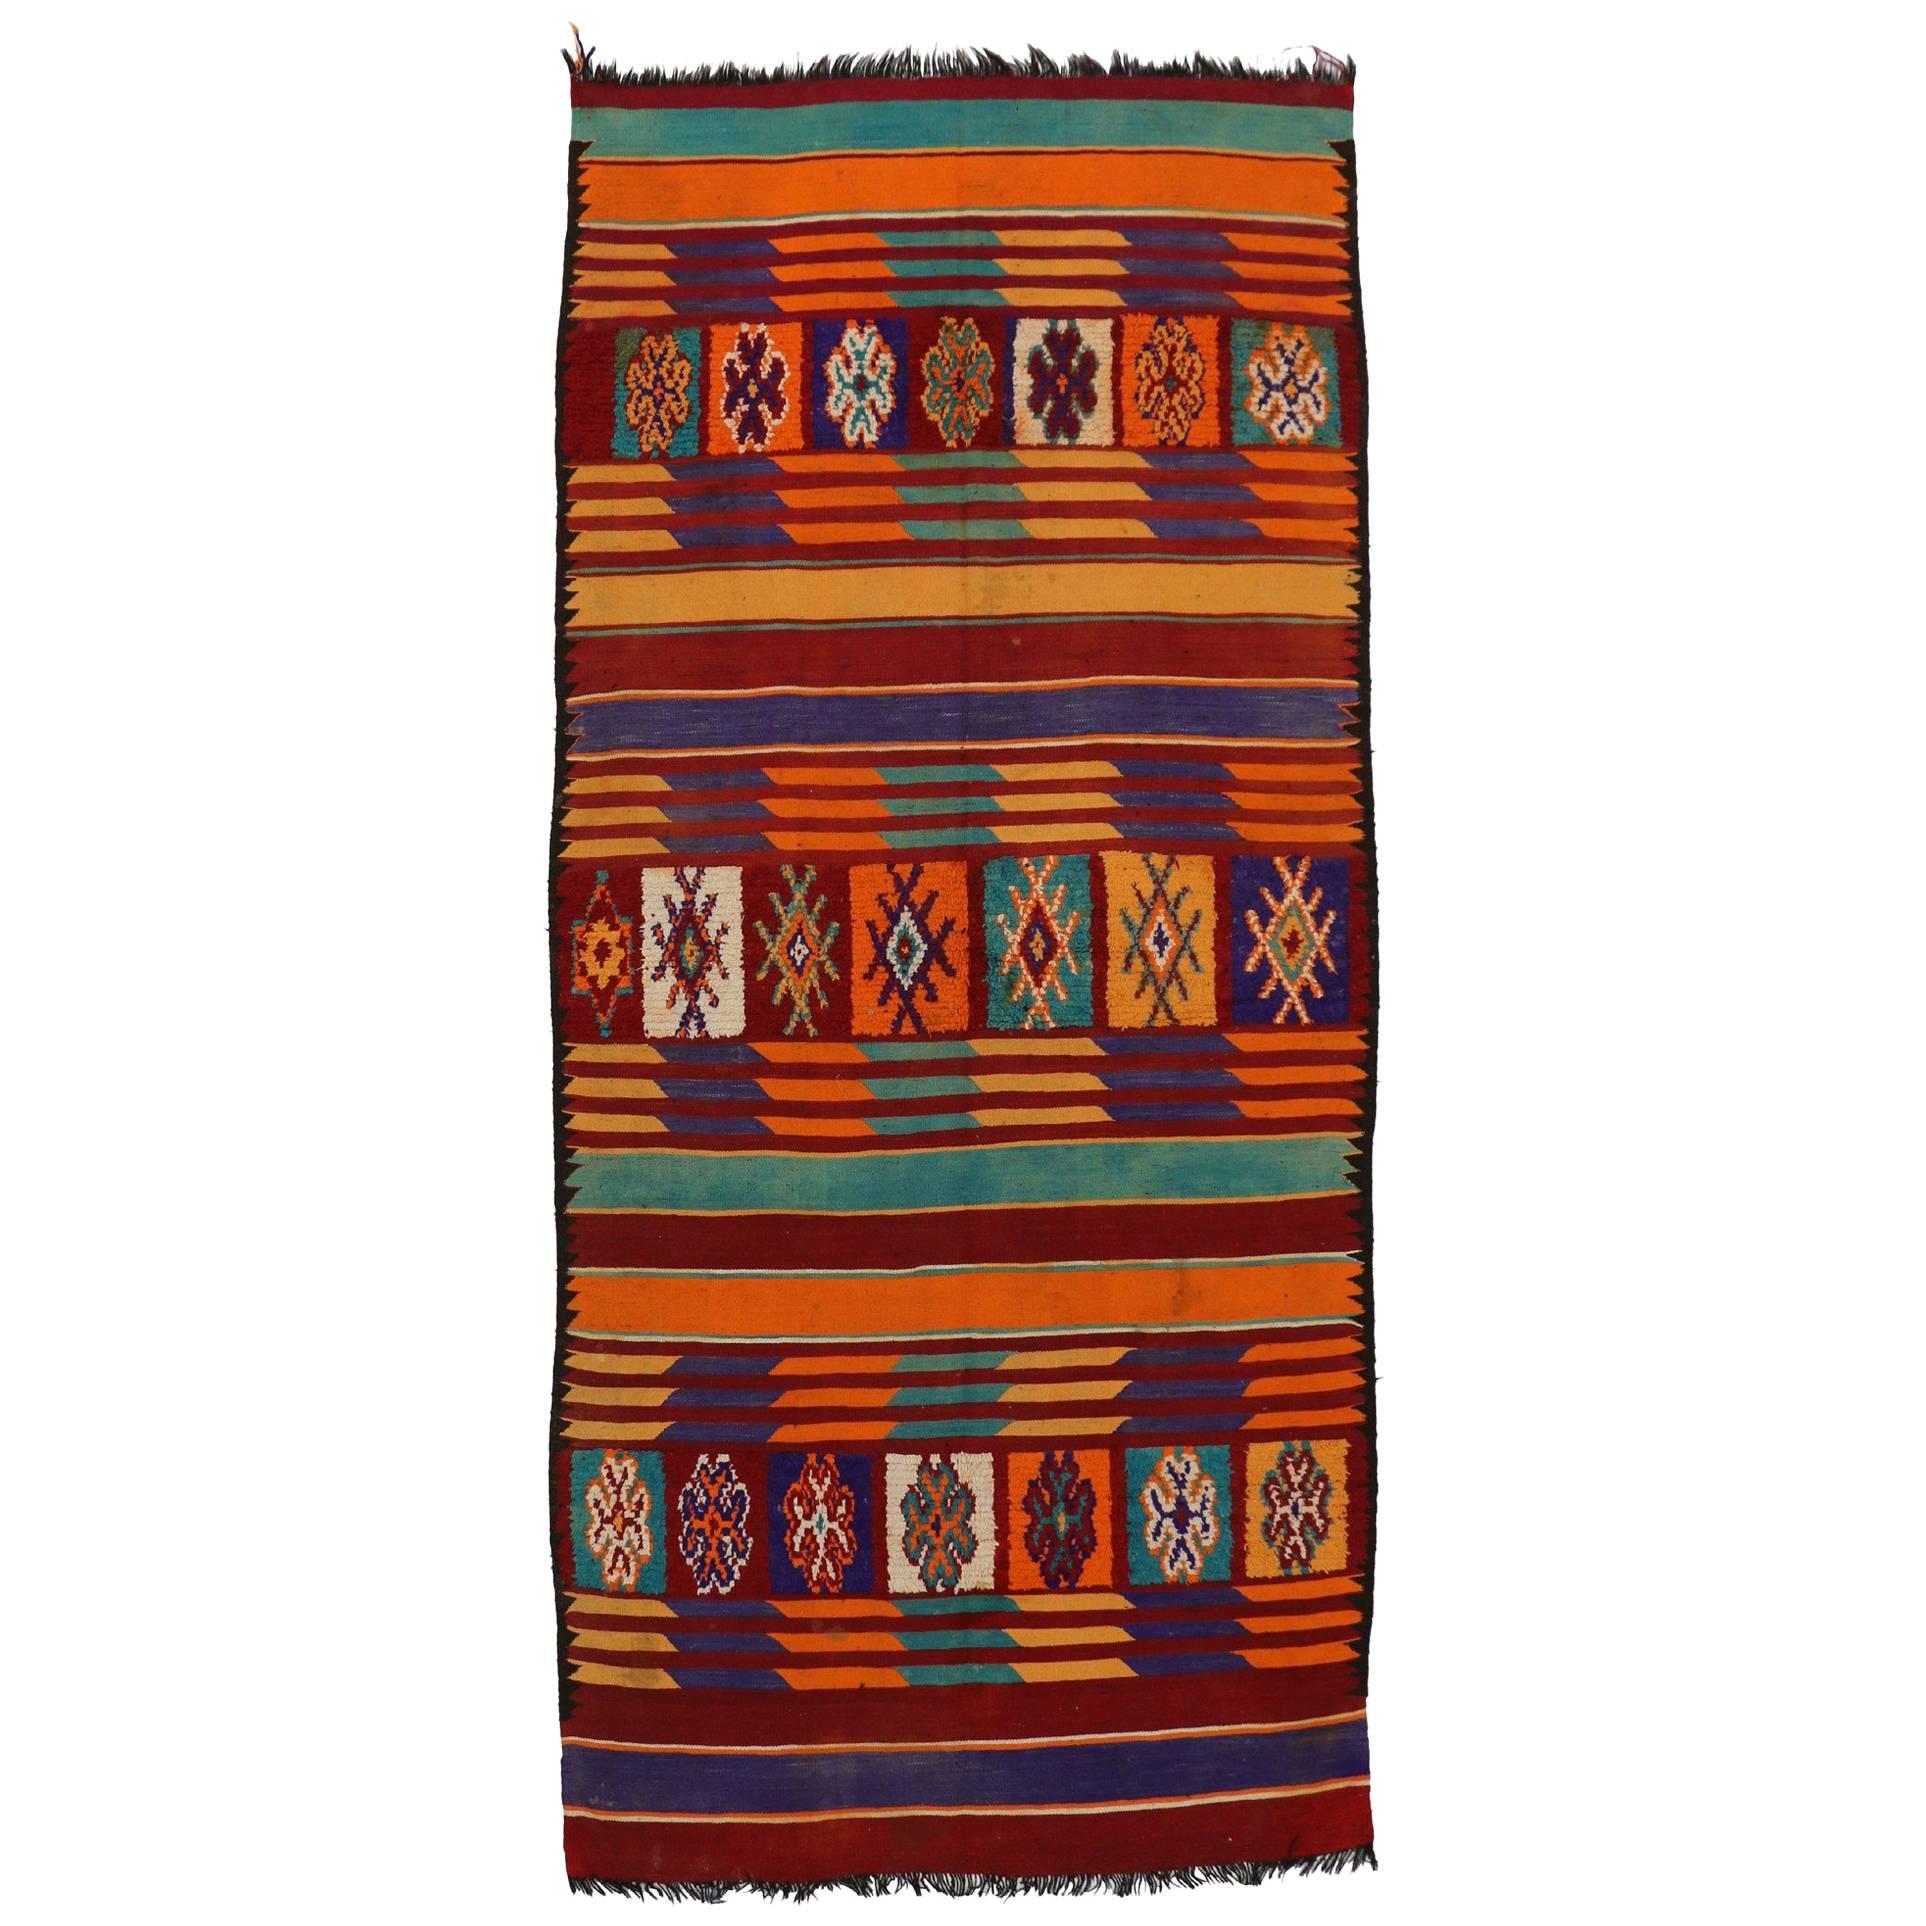 Tapis Kilim berbère marocain vintage avec style cabine moderne, tapis Kilim à tissage plat